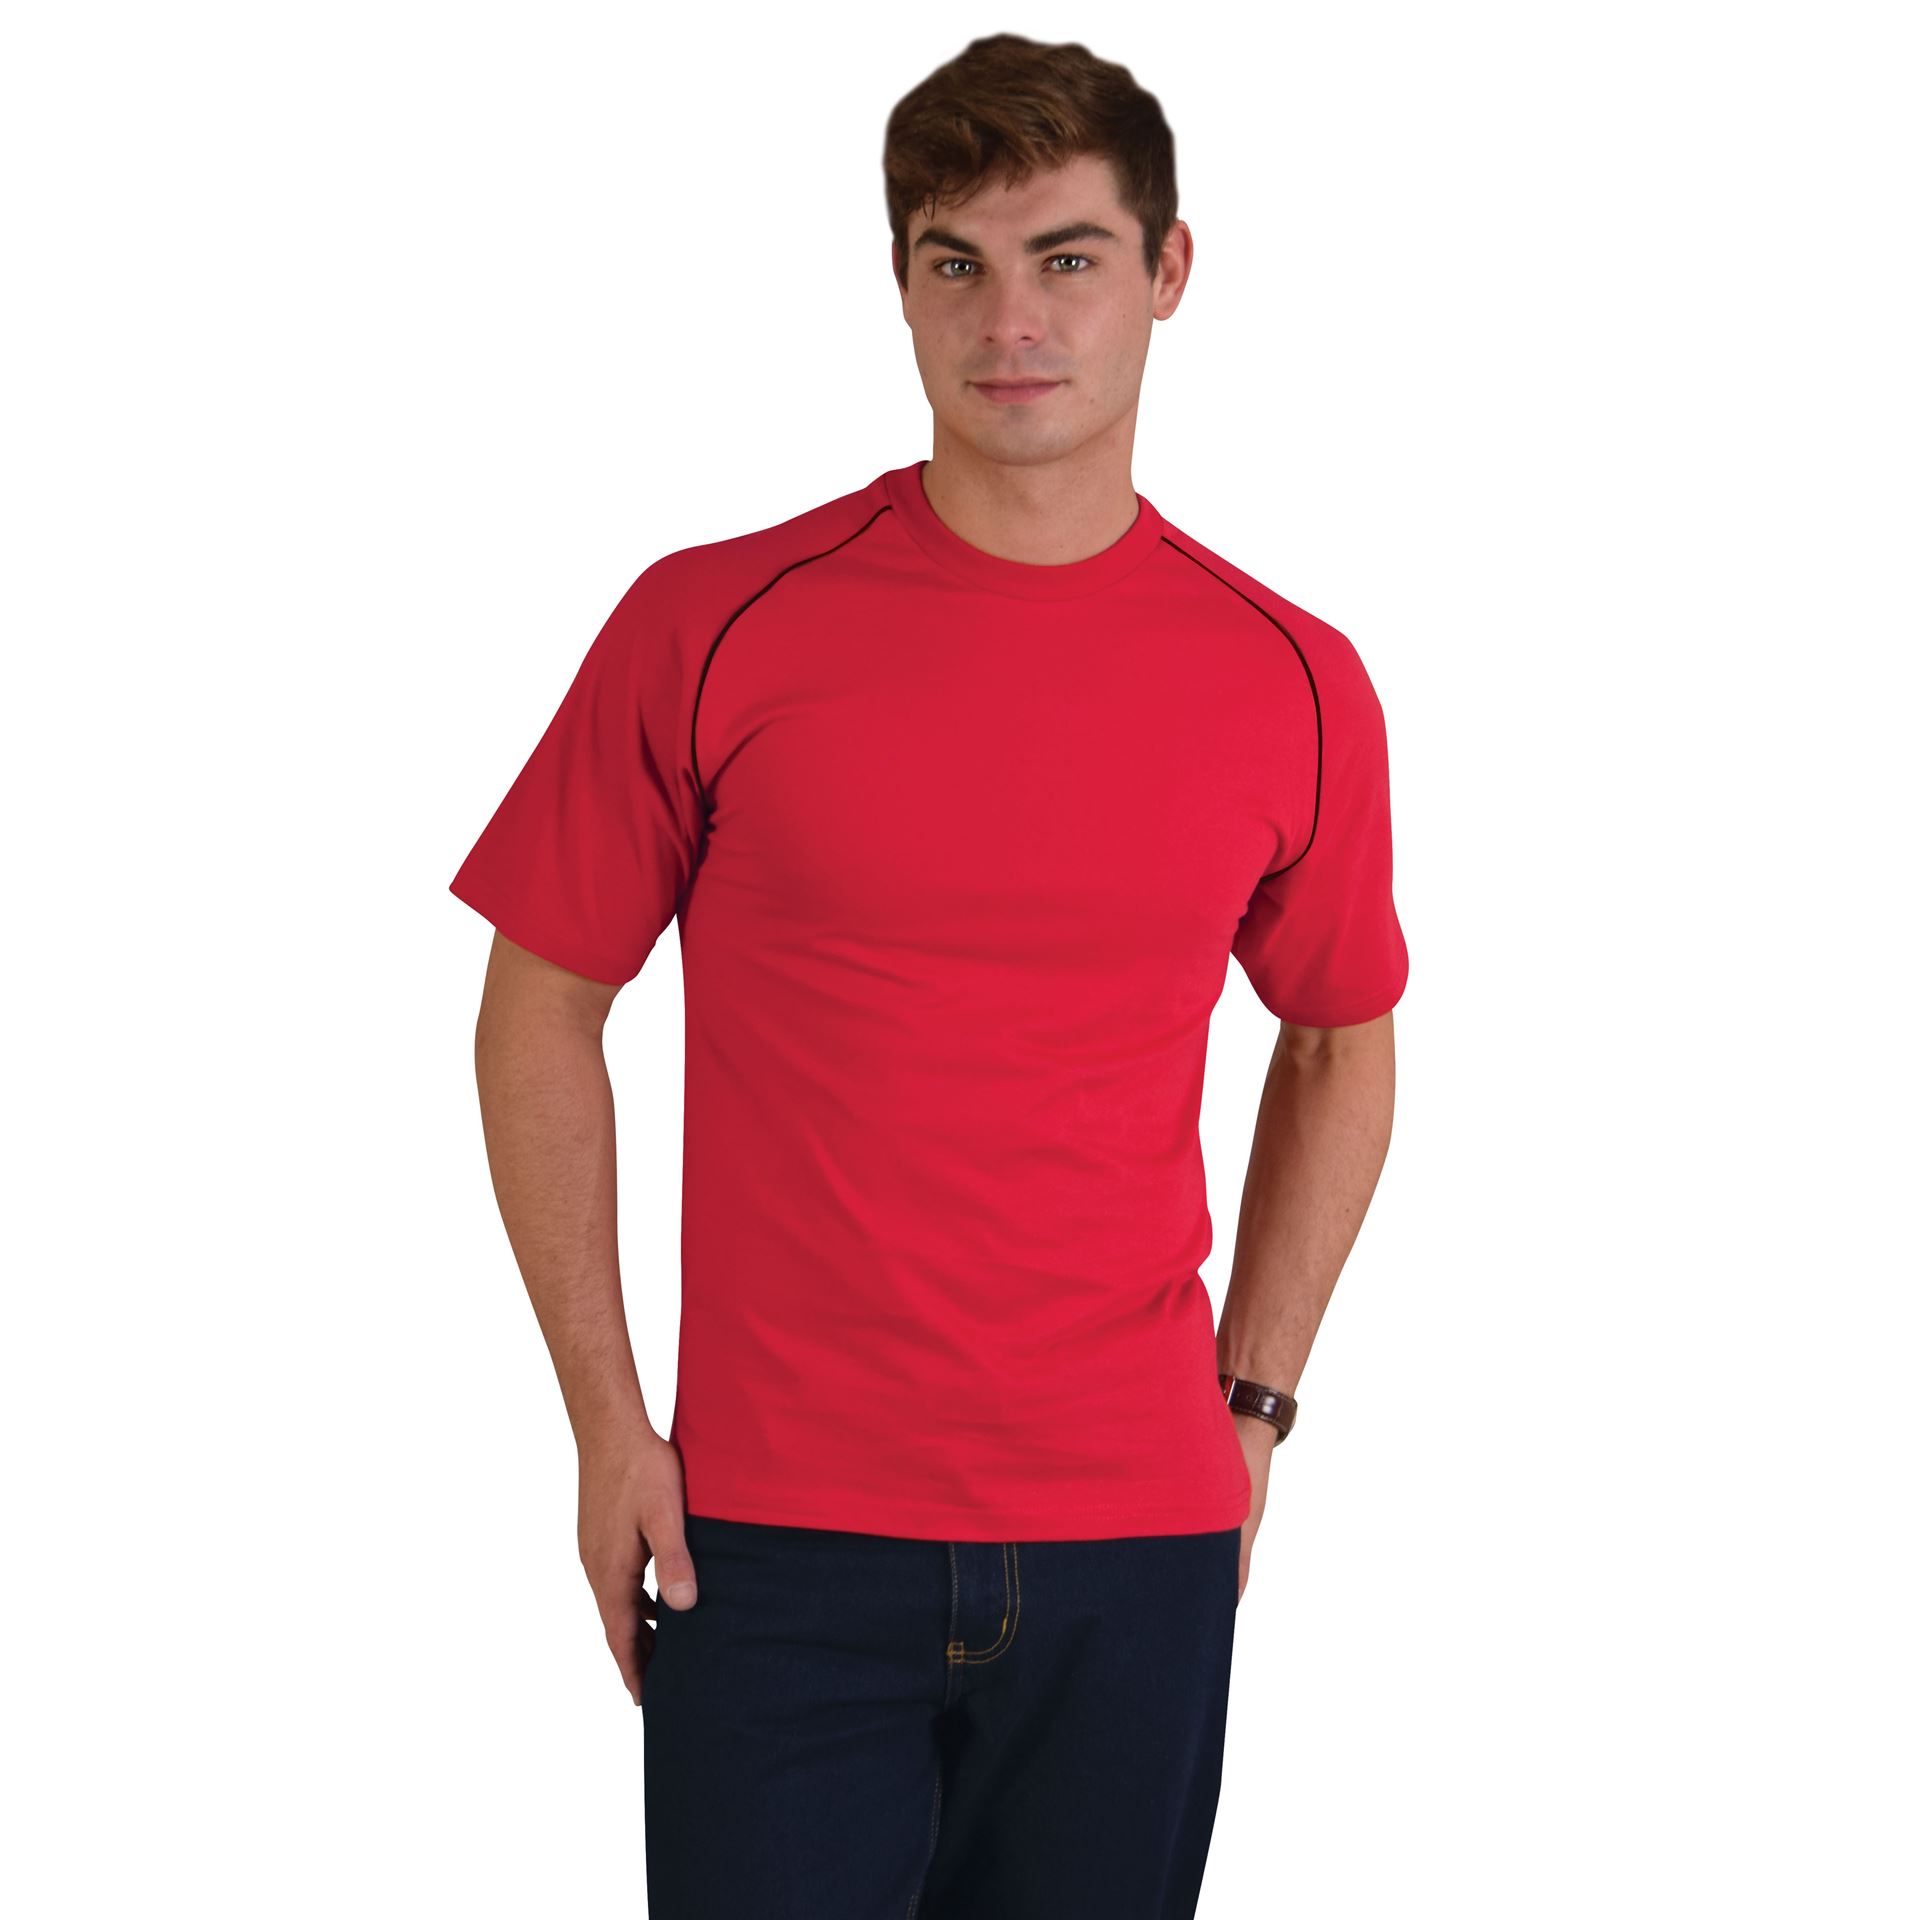 Raglan Trim T-Shirt - Avail in: White/Navy, Navy/White, Red/Blac